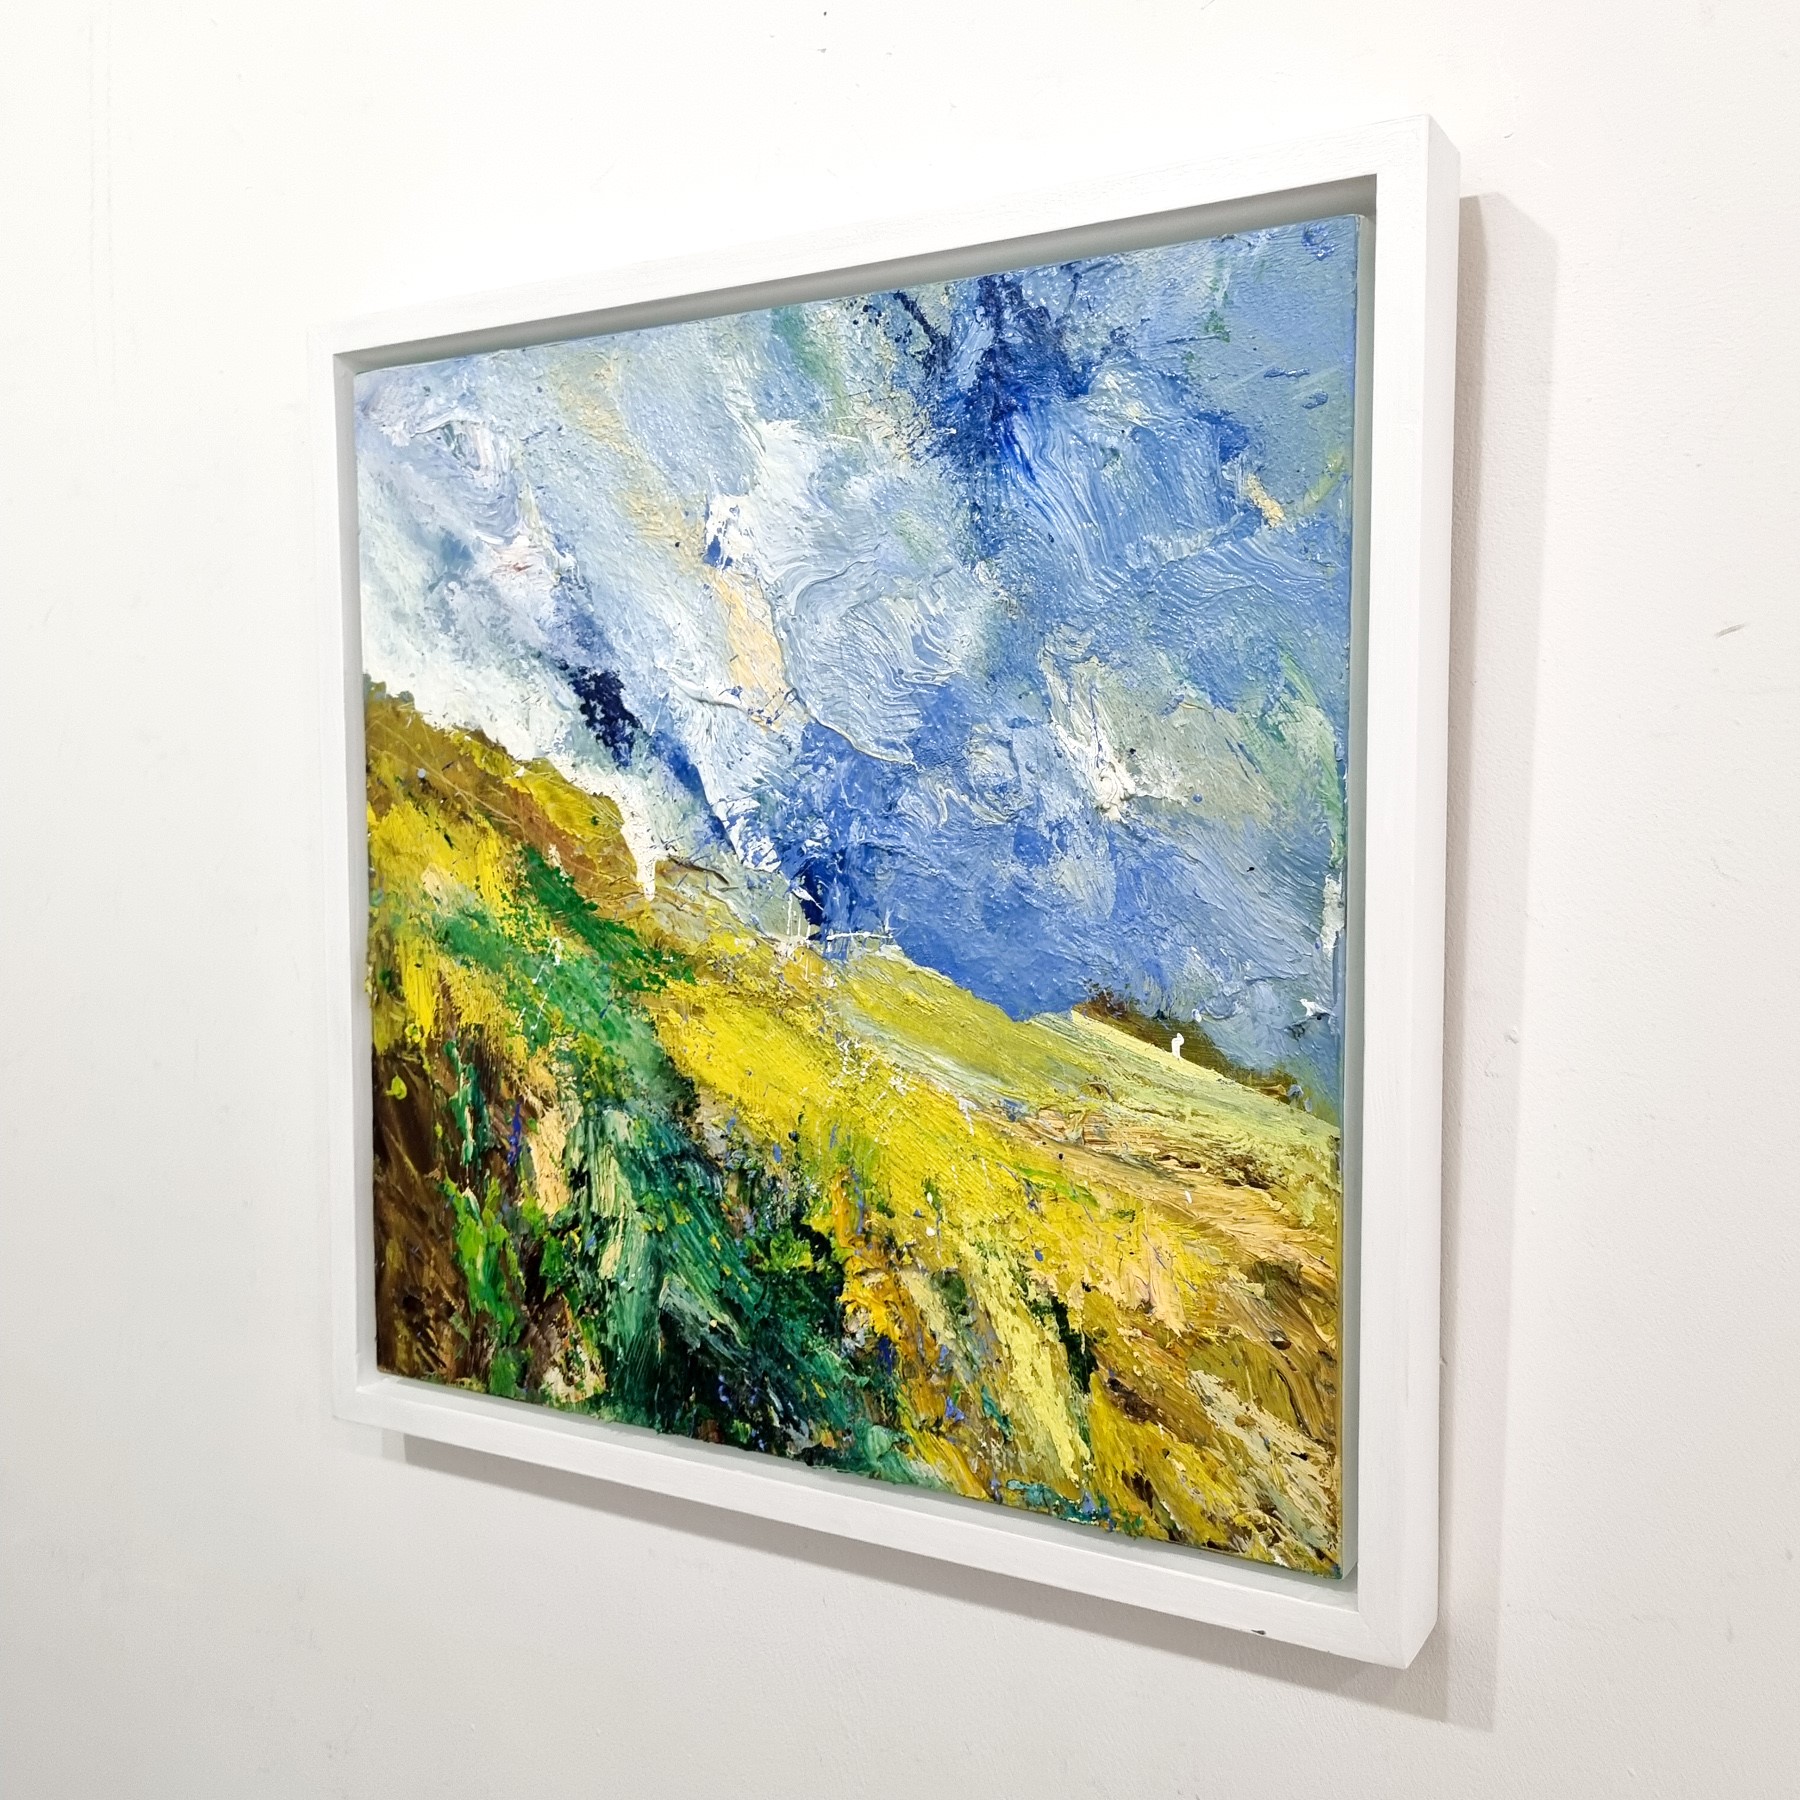 'Yellow Hillside, Skylarks' by artist Matthew Bourne